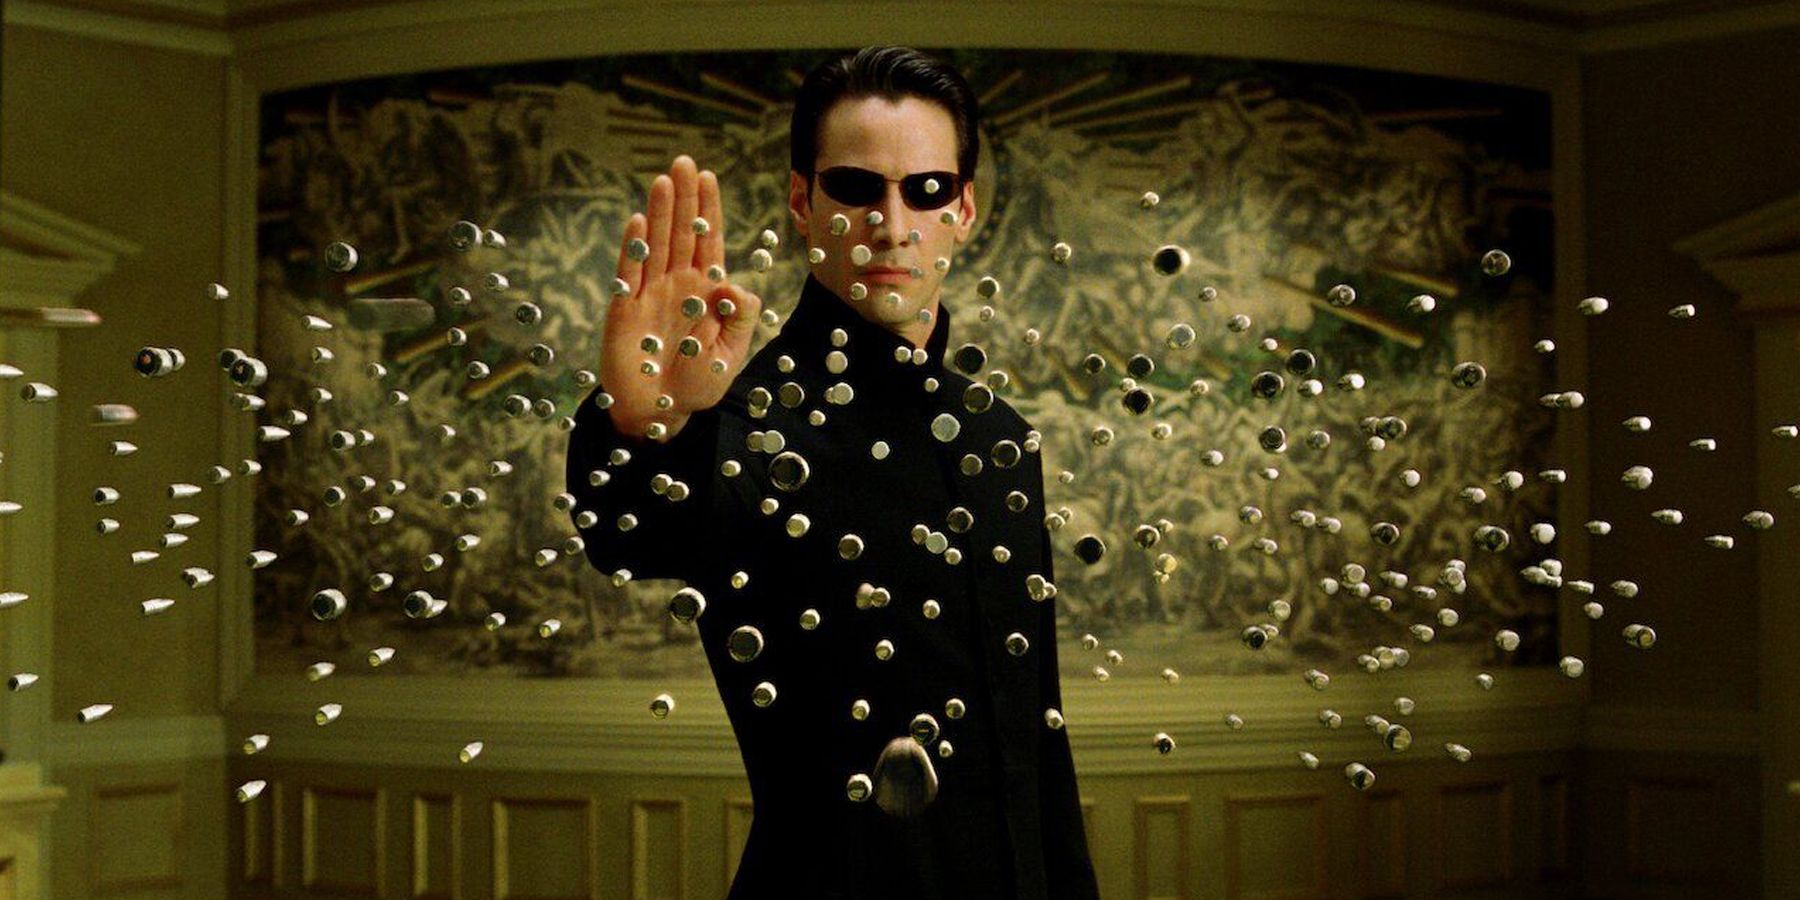 Matrix Neo stopping bullets